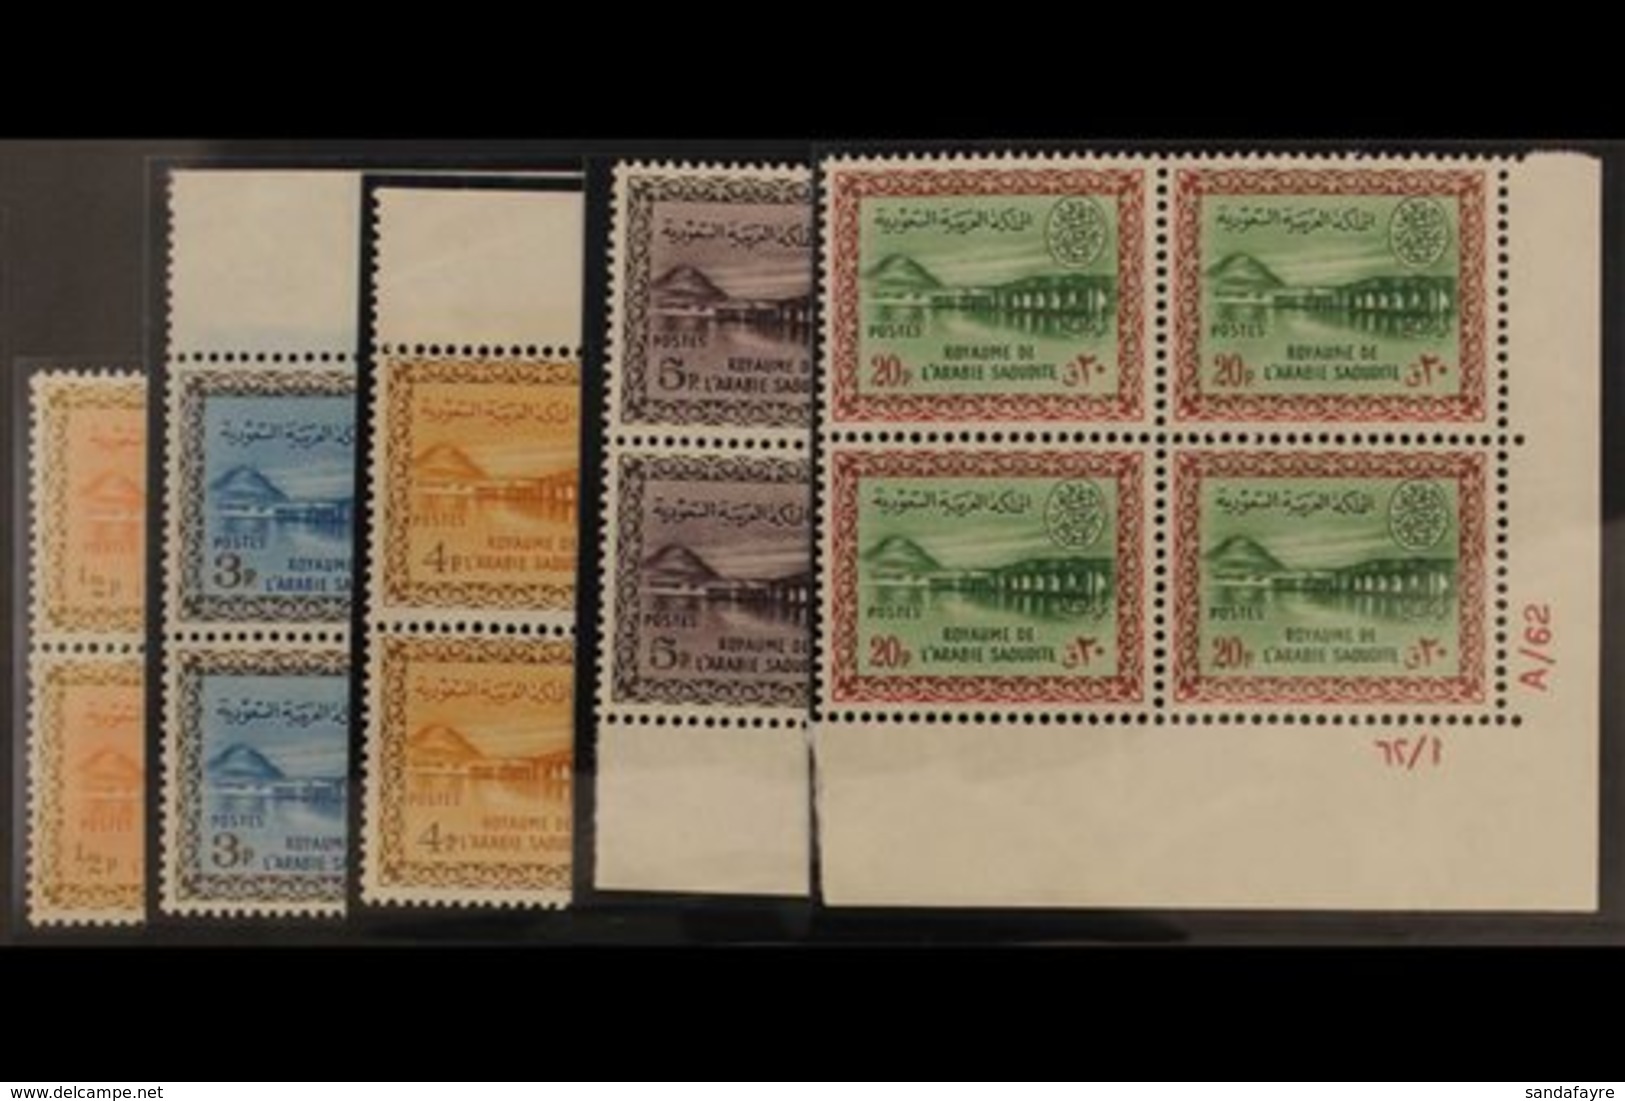 1963 - 5 Wadi Hanifa Dam Set, Wmk Palm And Crossed Swords, SG 476/80, In Superb Never Hinged Blocks Of 4. (20 Stamps) Fo - Saudi Arabia